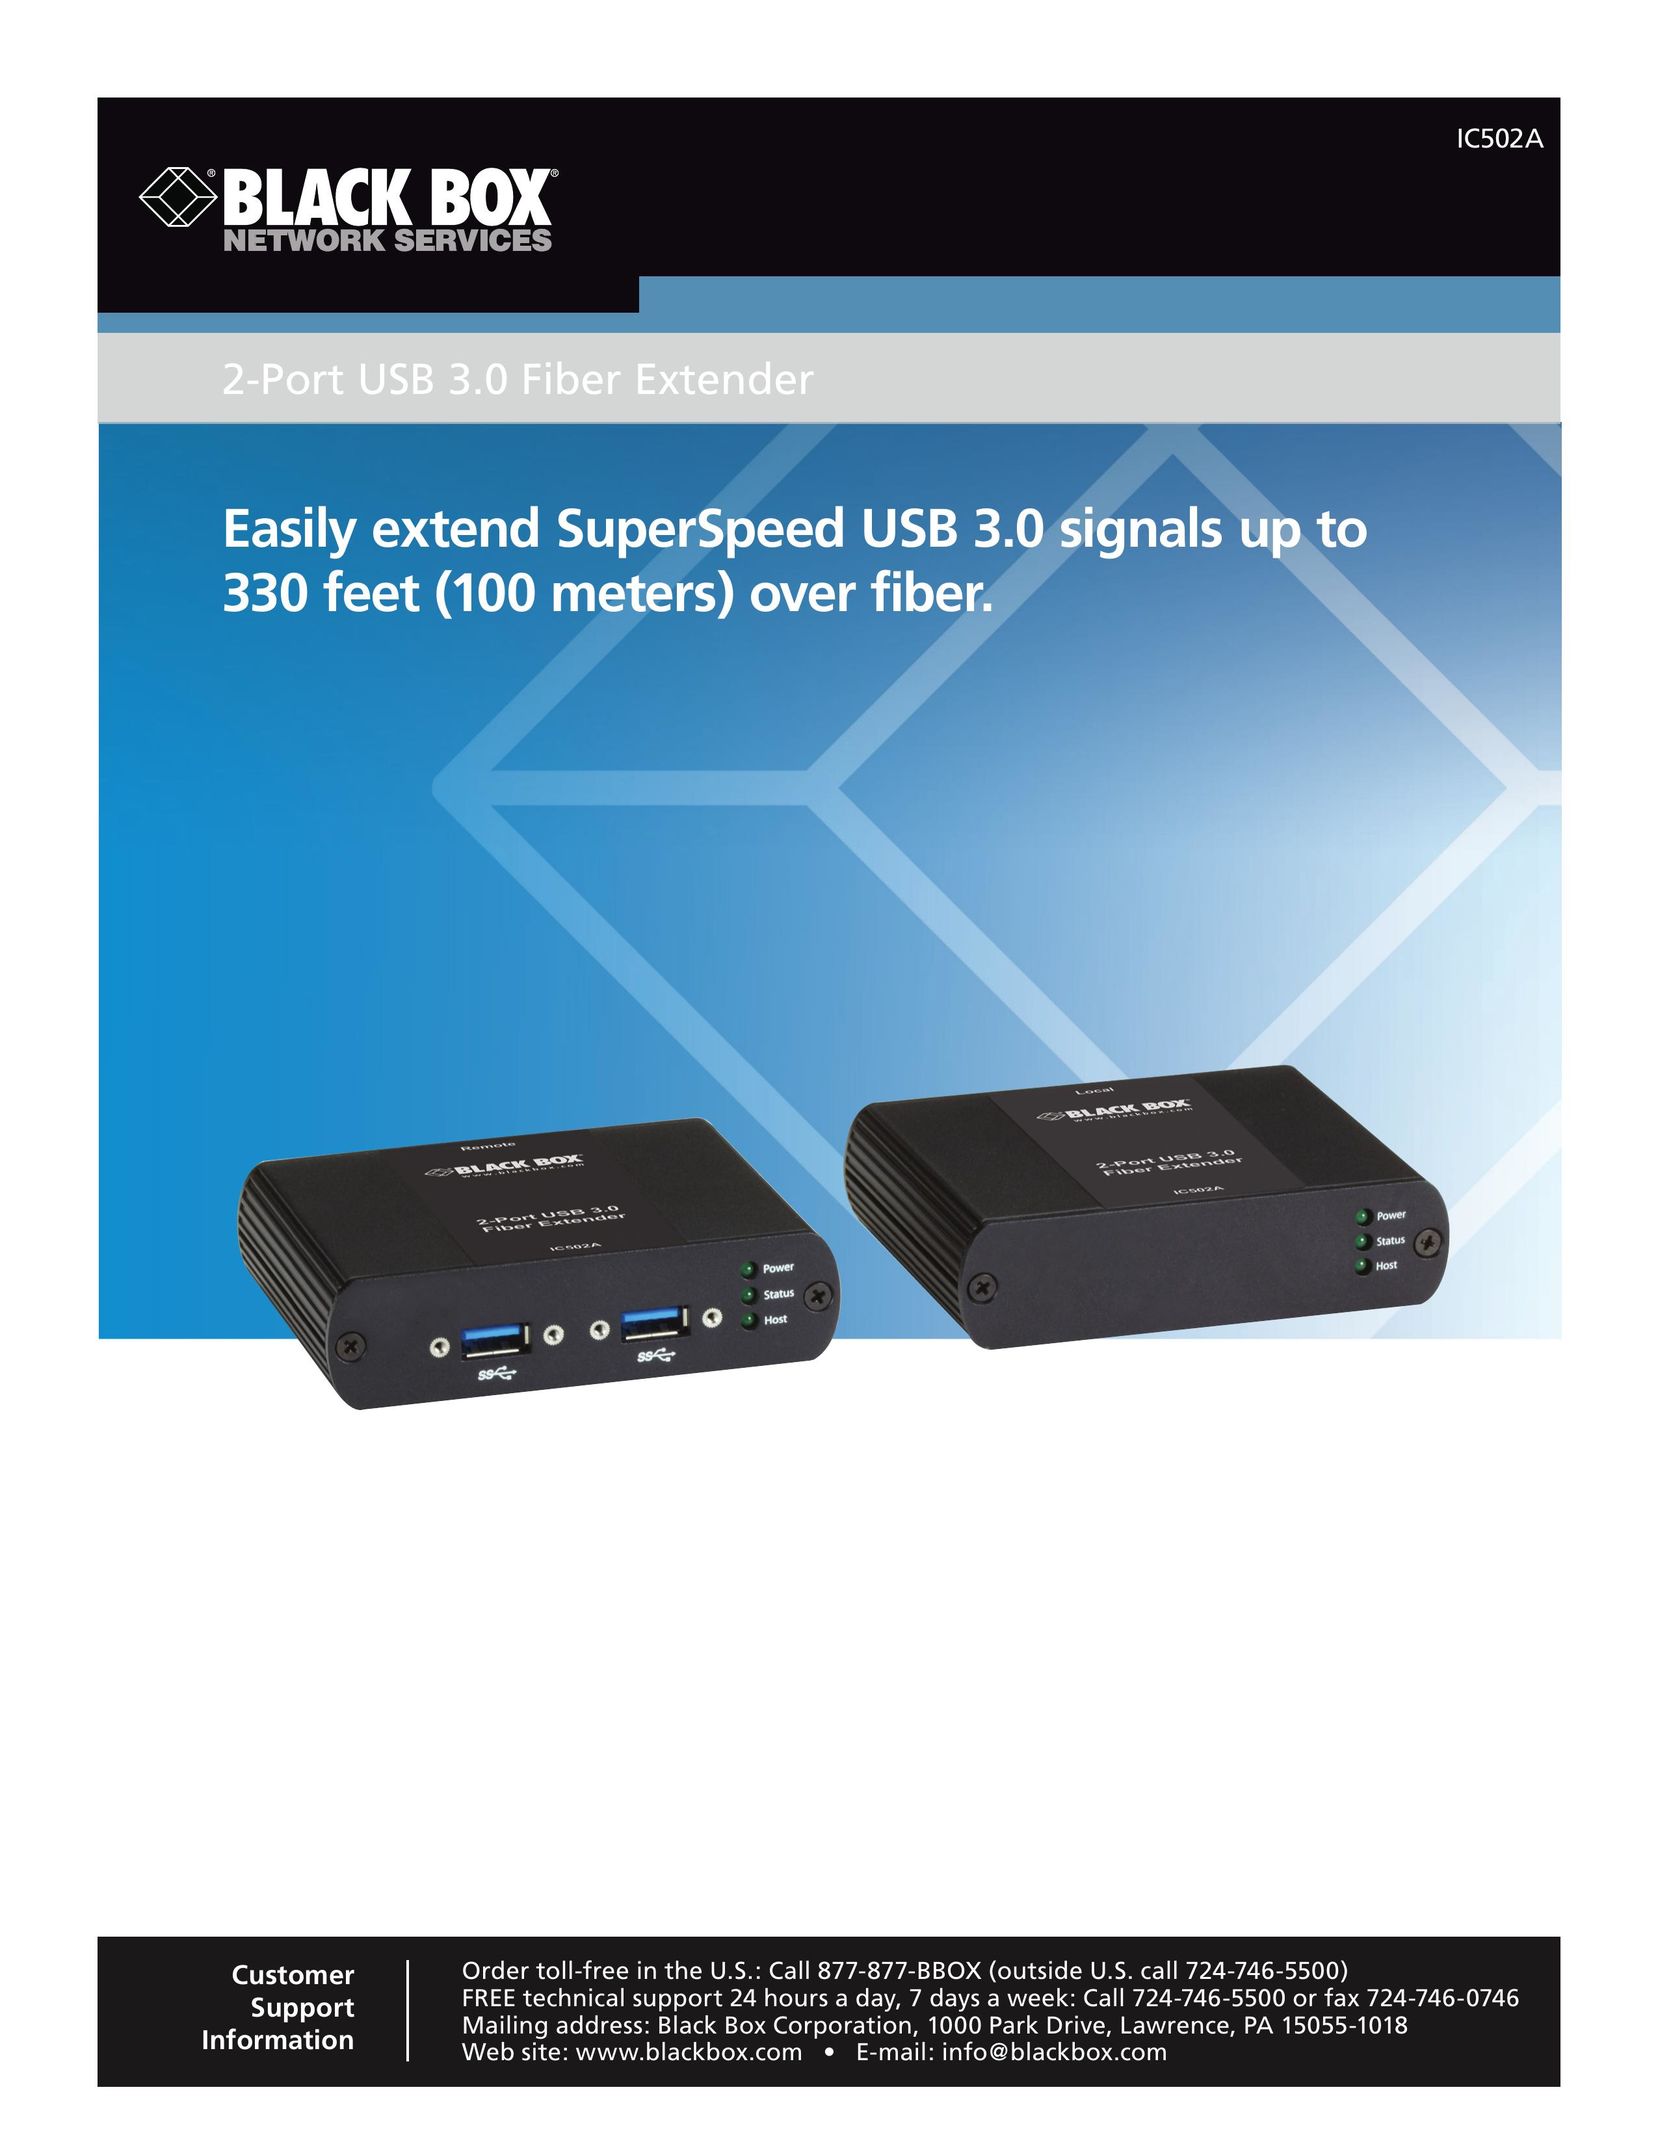 Black Box 2-Port USB 3.0 Fiber Extender Electronic Accessory User Manual